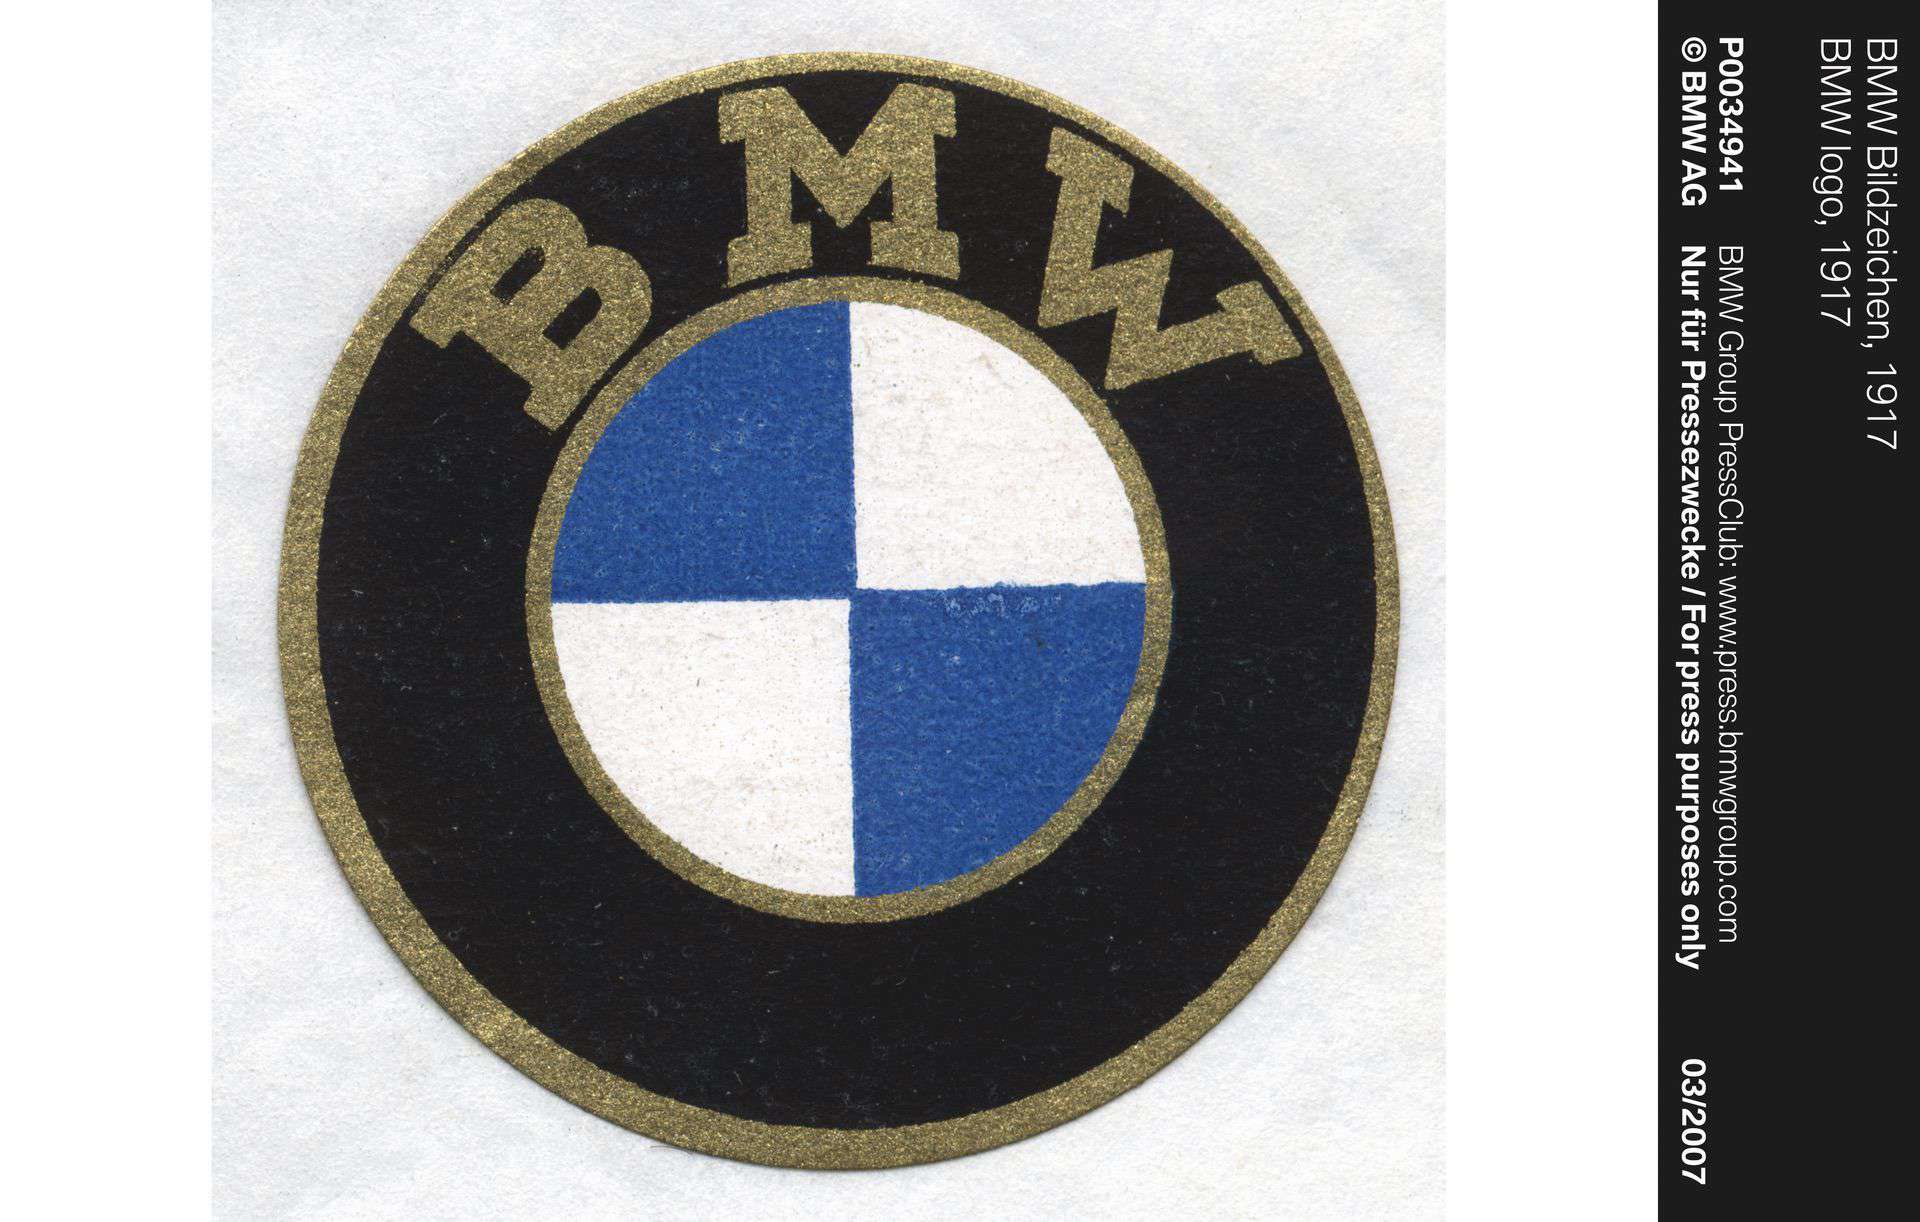 BMW Logo 1917